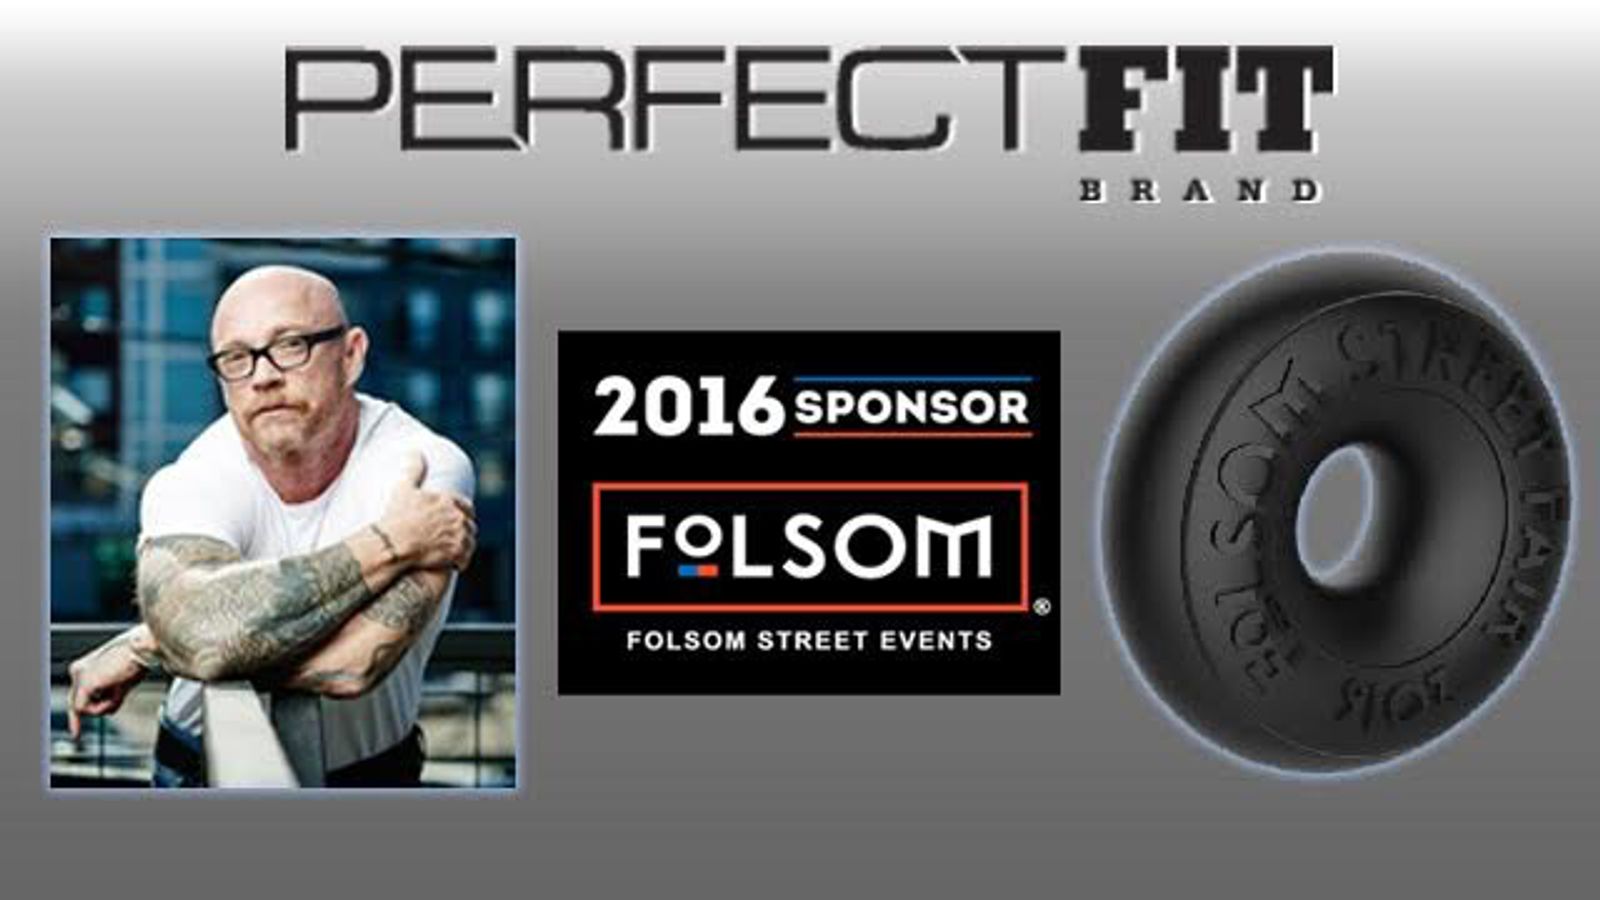 Perfect Fit Brand Premier Sponsor For 2016 Folsom Street Events